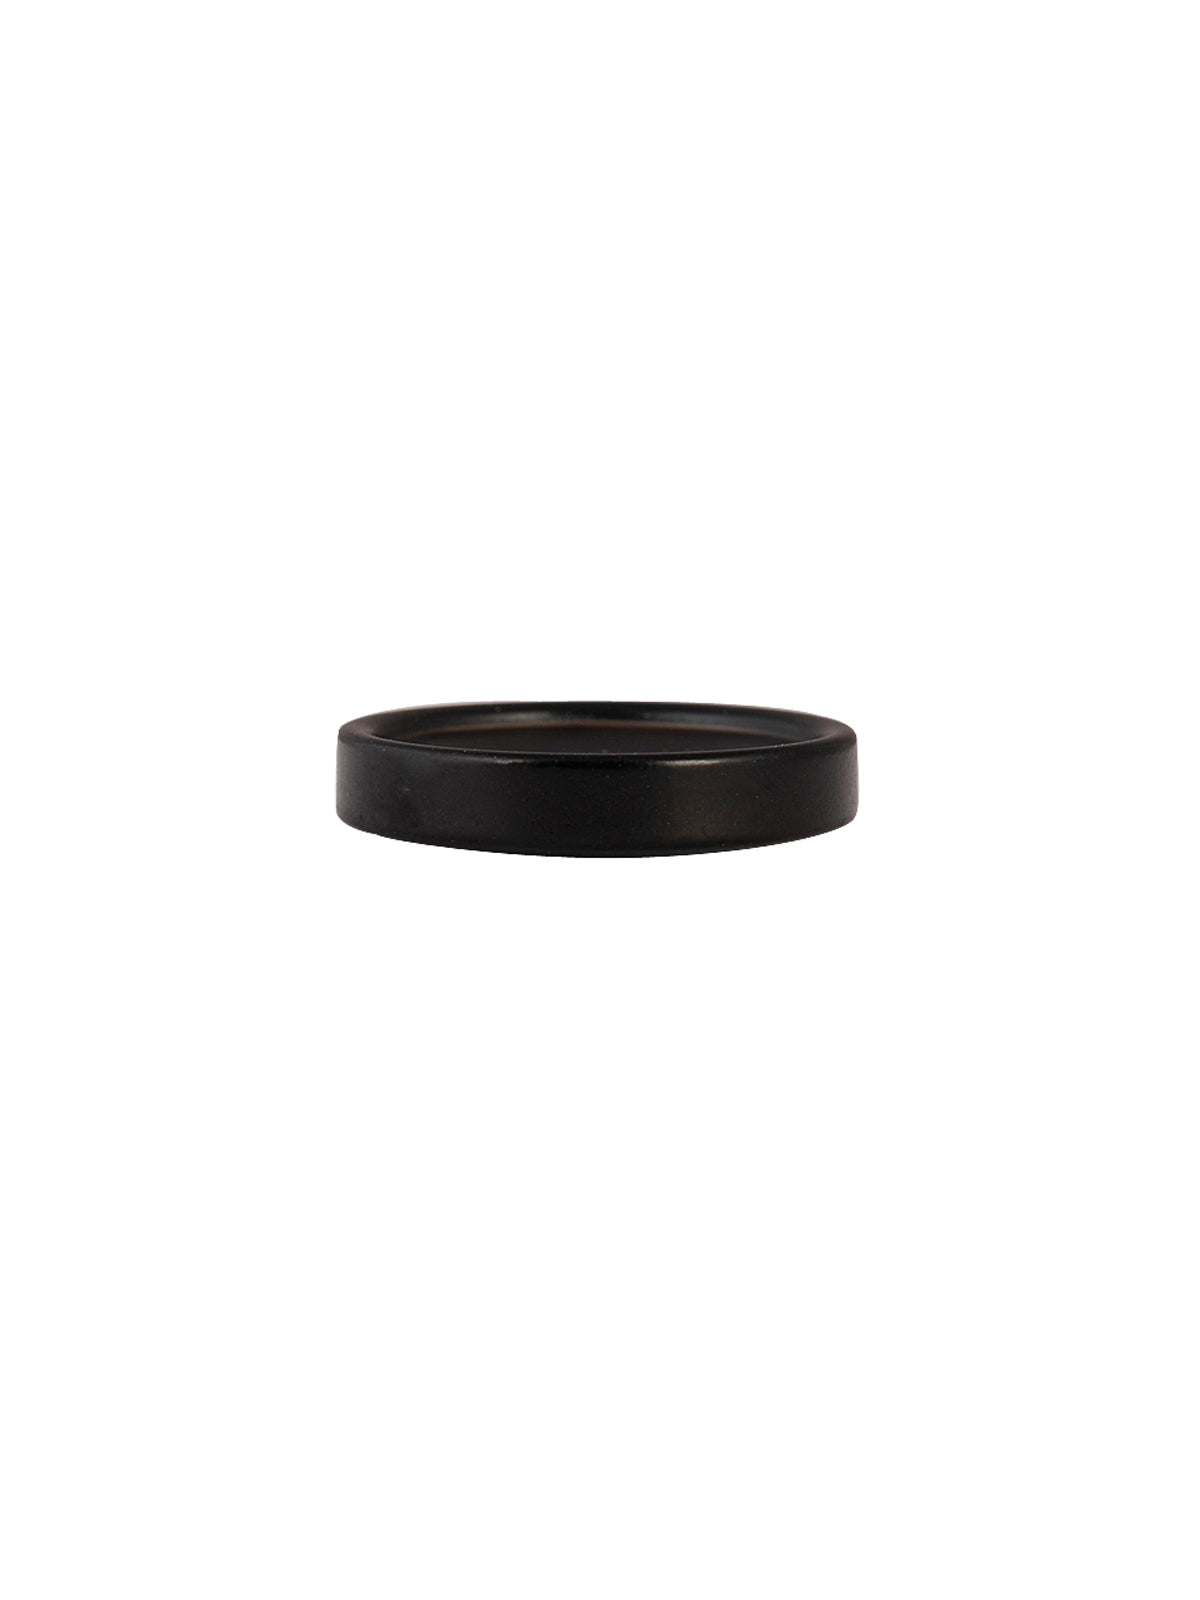 Black 4-Hole Round Shape Hollow Blazer/Coat Button